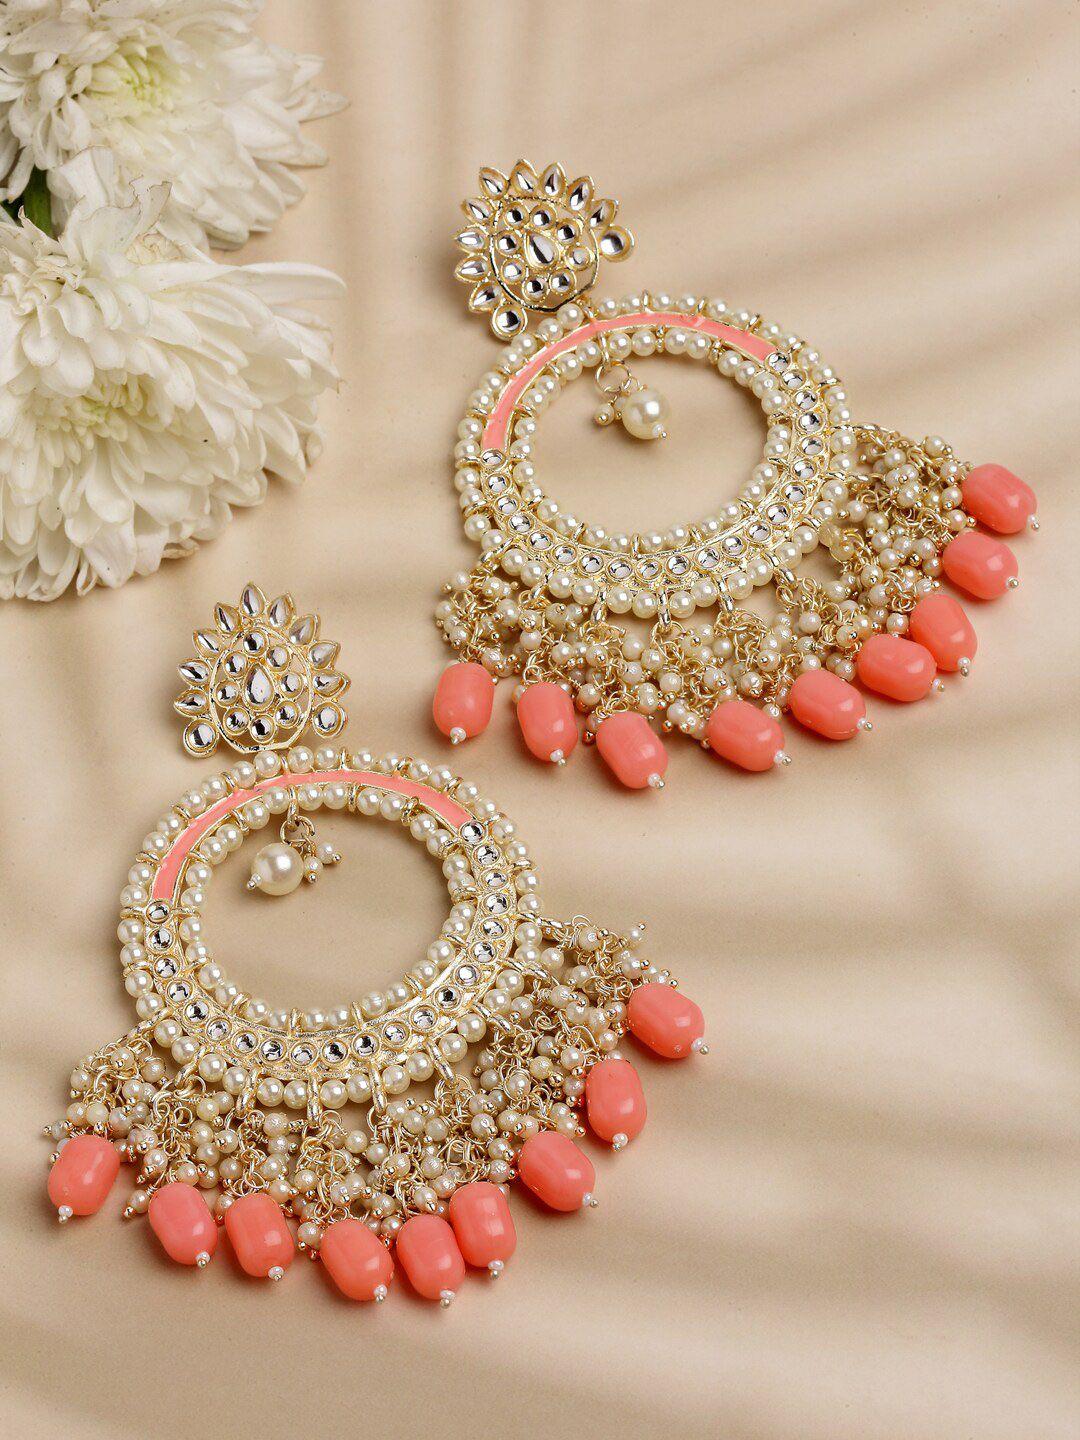 shining diva gold-plated classic chandbalis earrings